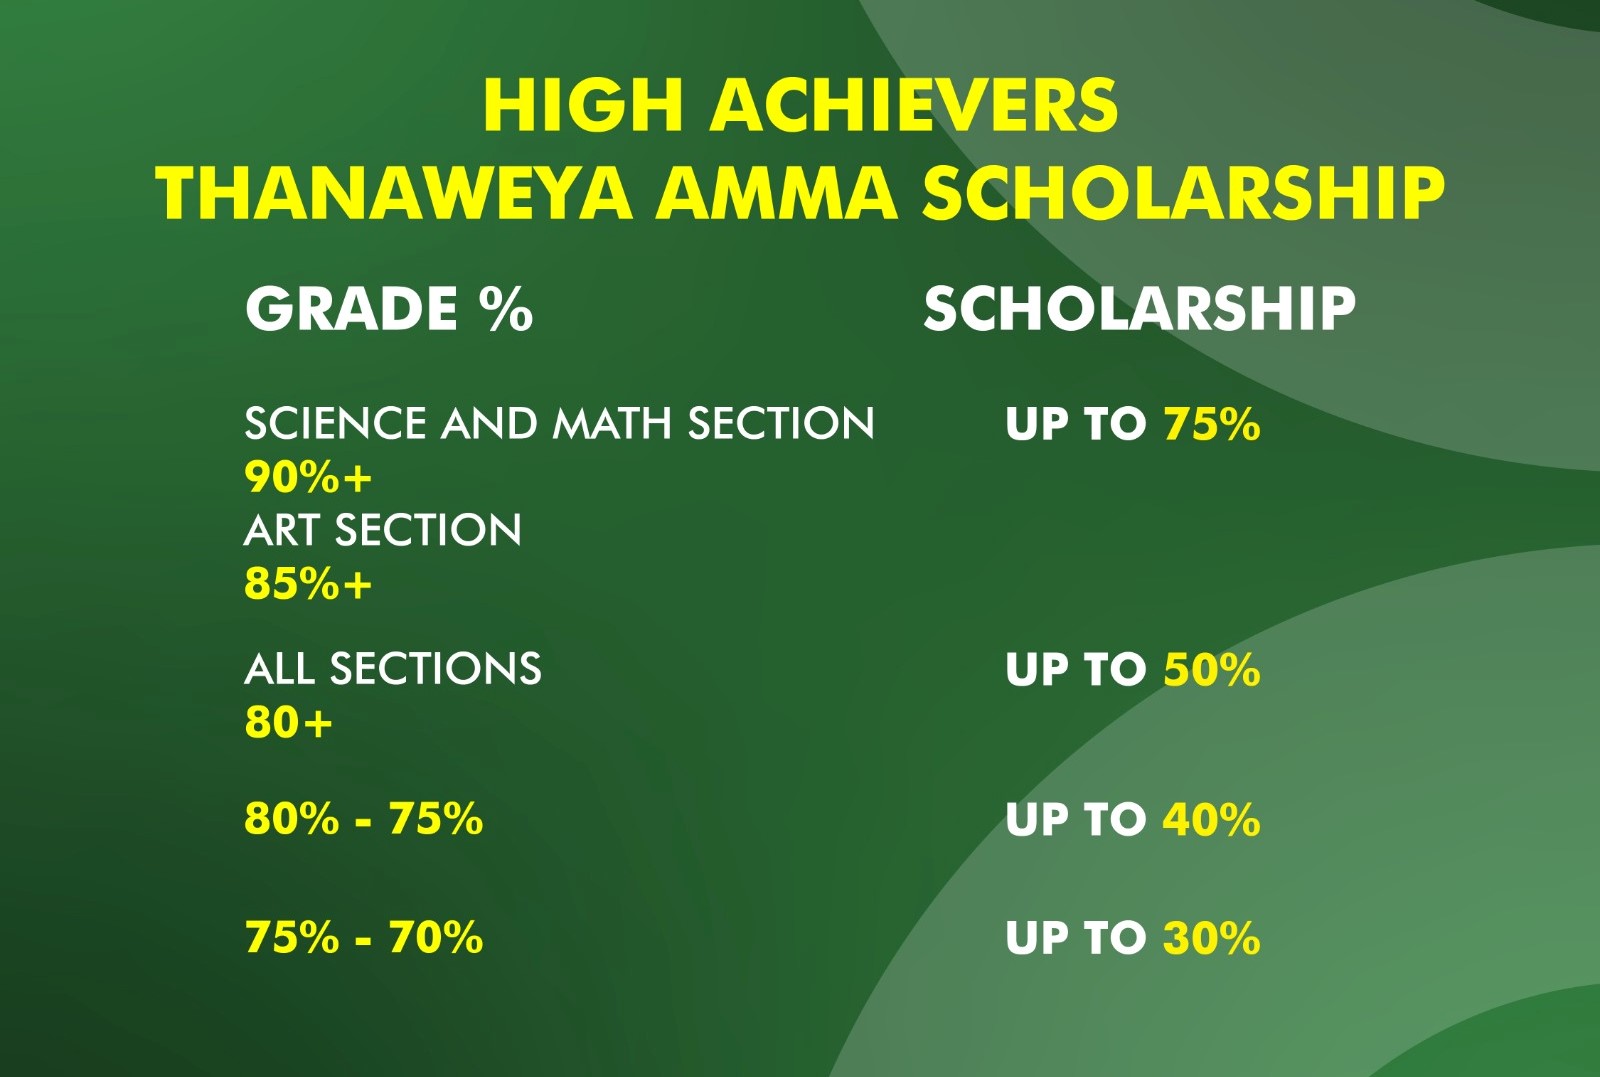 Thanaweya Amma Scholarships